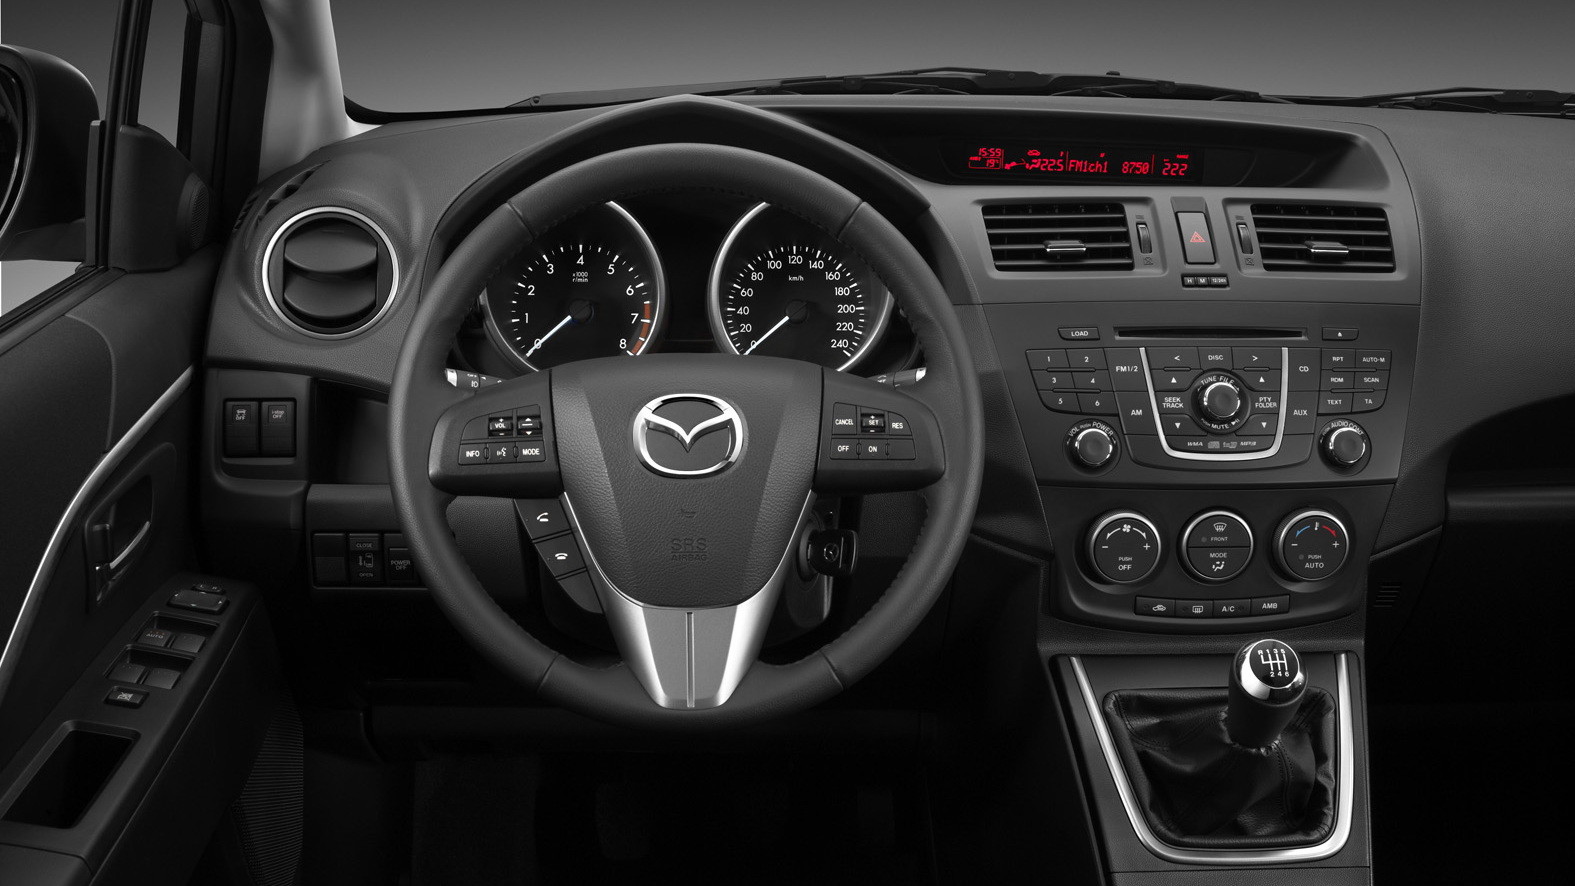 New 2011 Mazda Mazda5 minivan, to be unveiled at Geneva Motor Show, March 2010